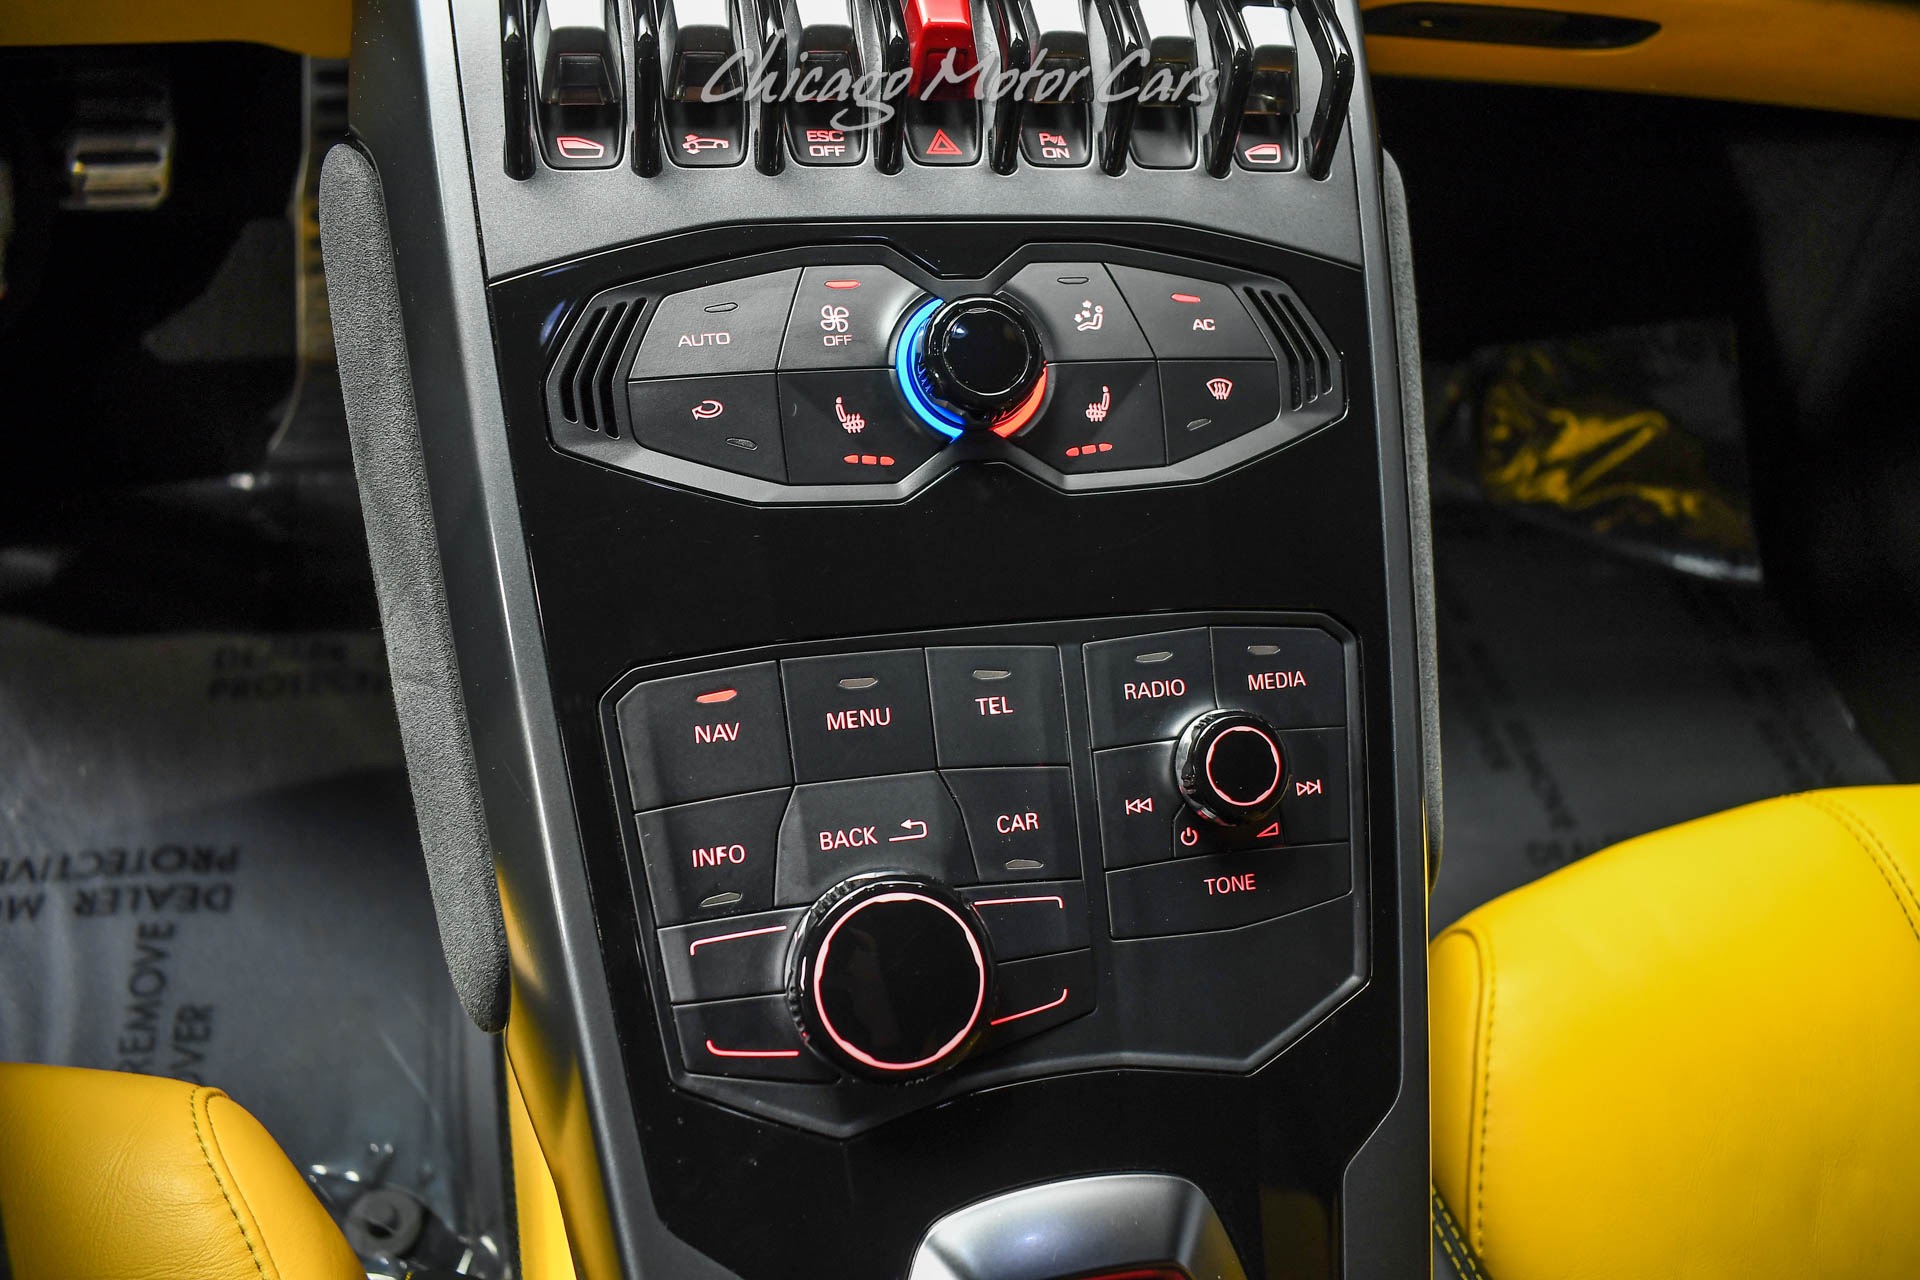 Used-2015-Lamborghini-Huracan-LP610-4-Coupe-FACTORY-Matte-Paint-1221-Wheels-HOT-Spec-FULL-PPF-Front-Lift